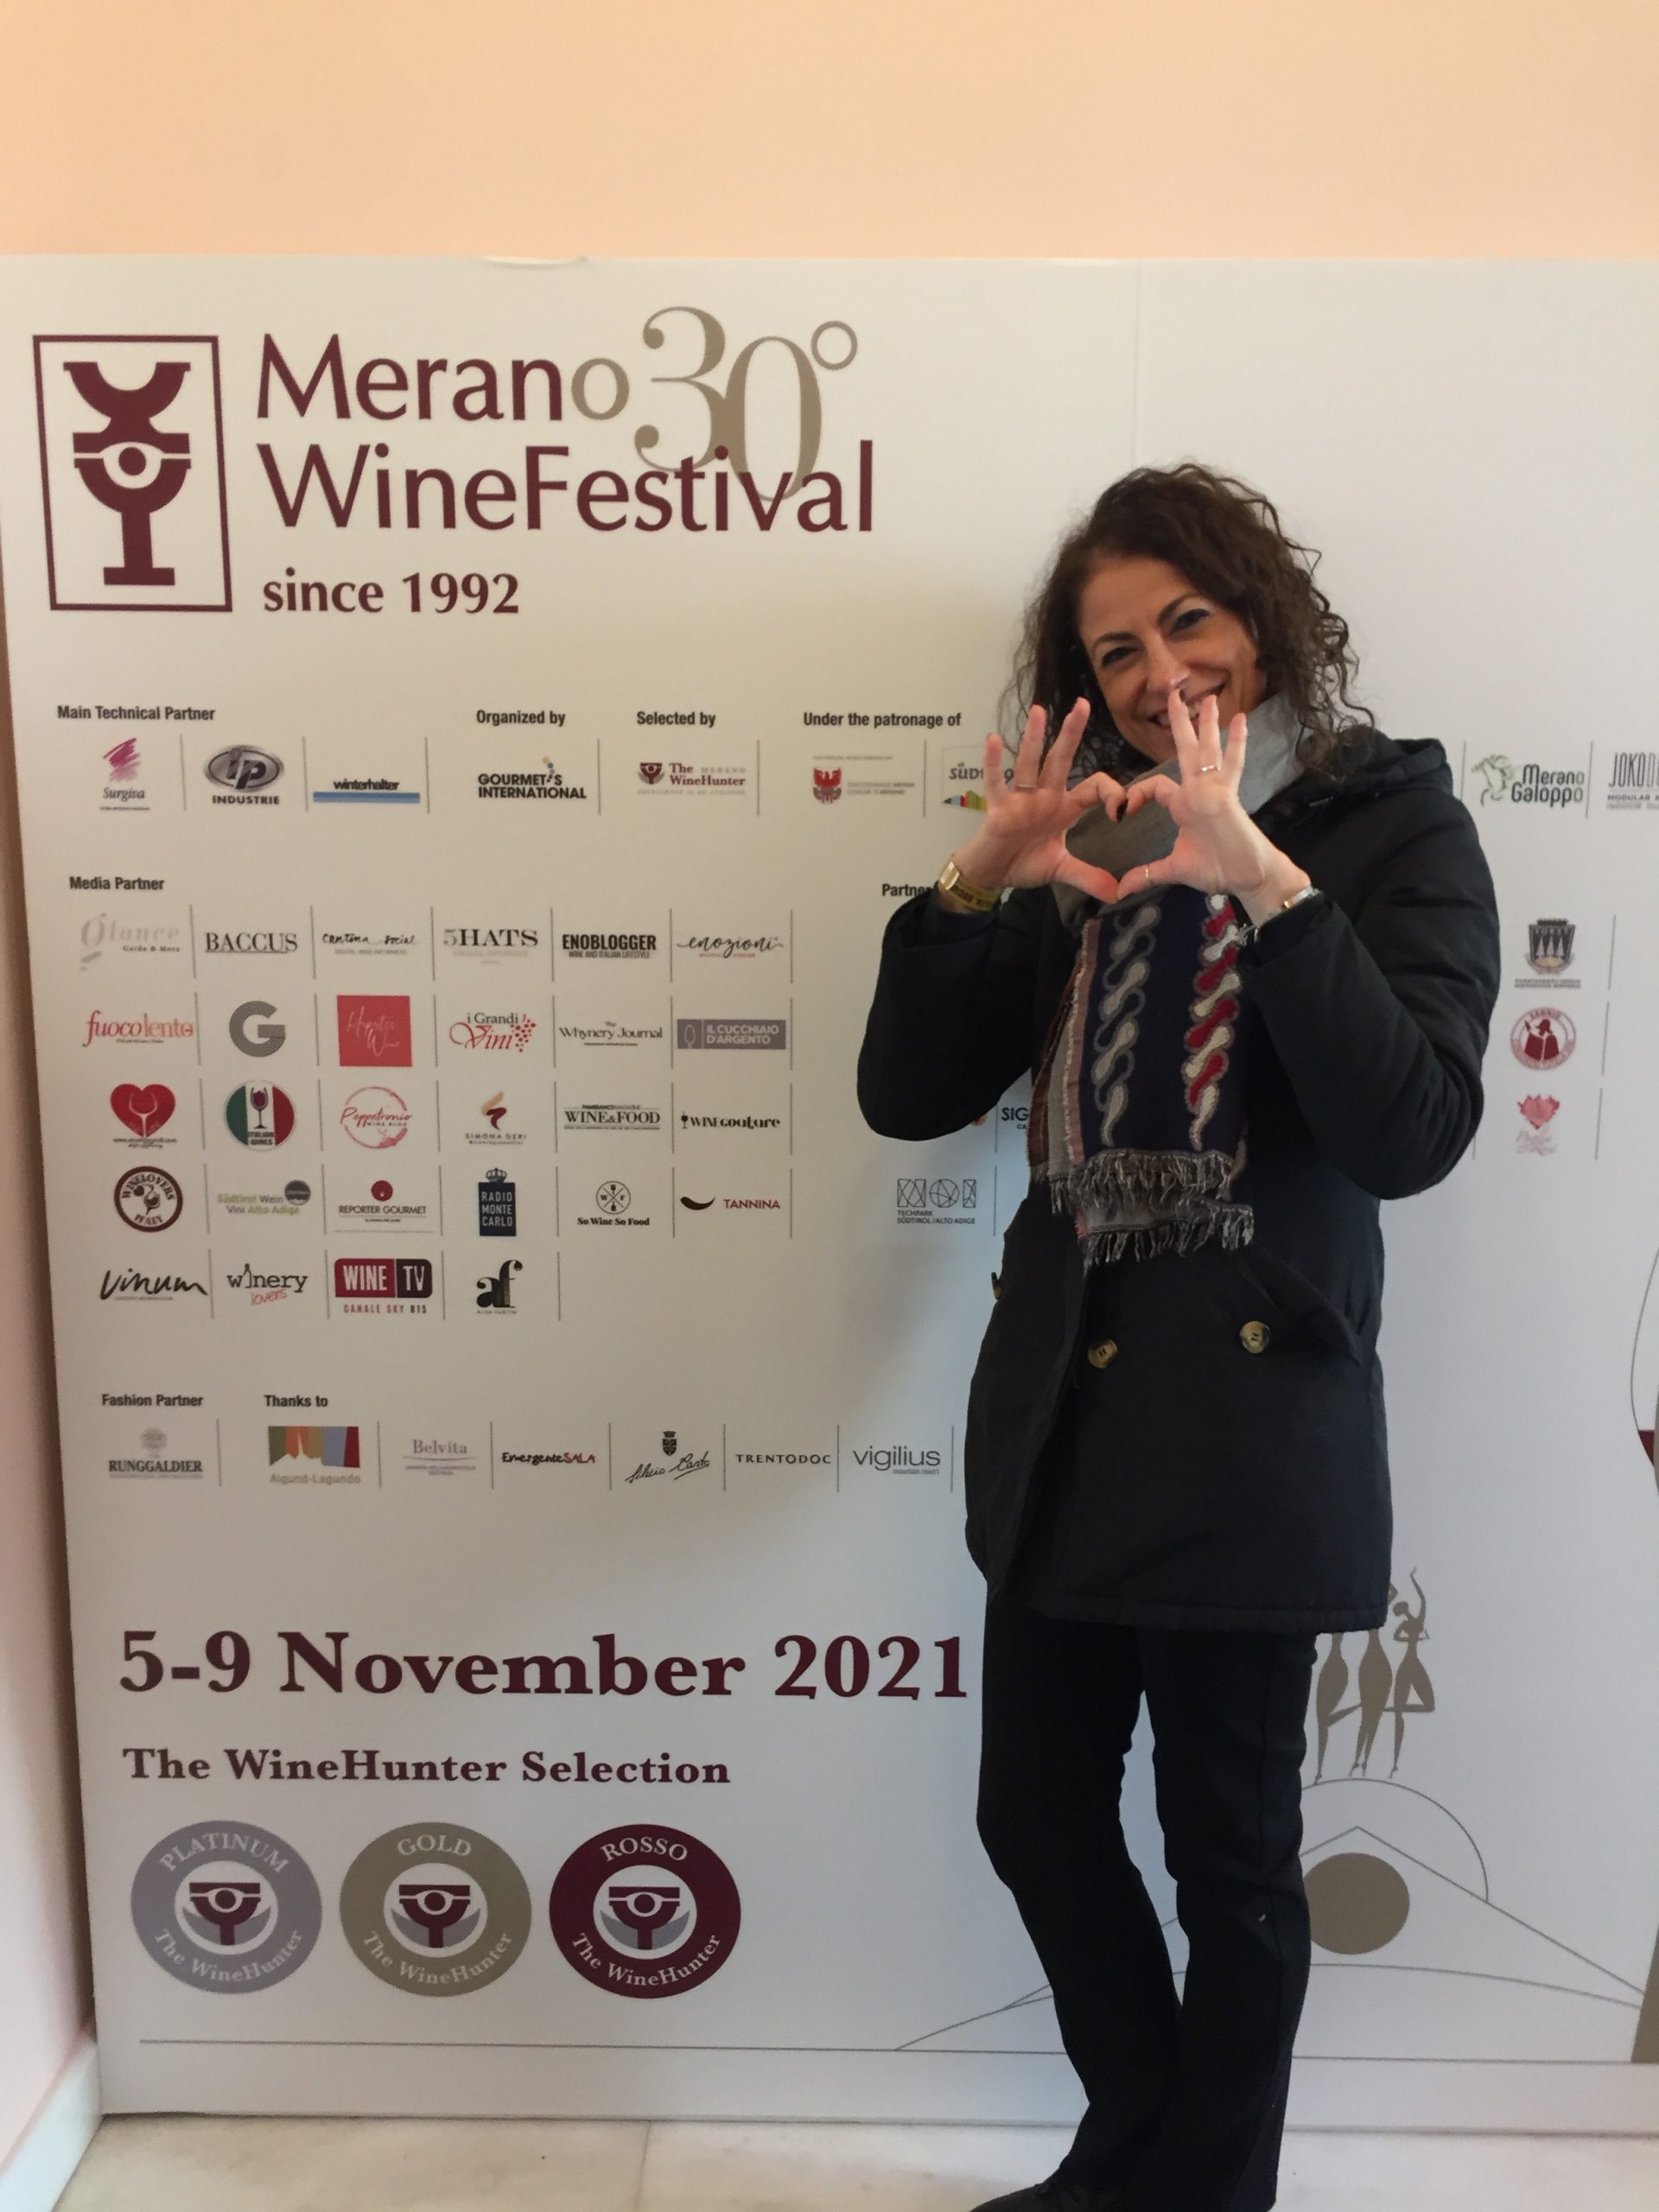 Merano Wine Festival Media partner